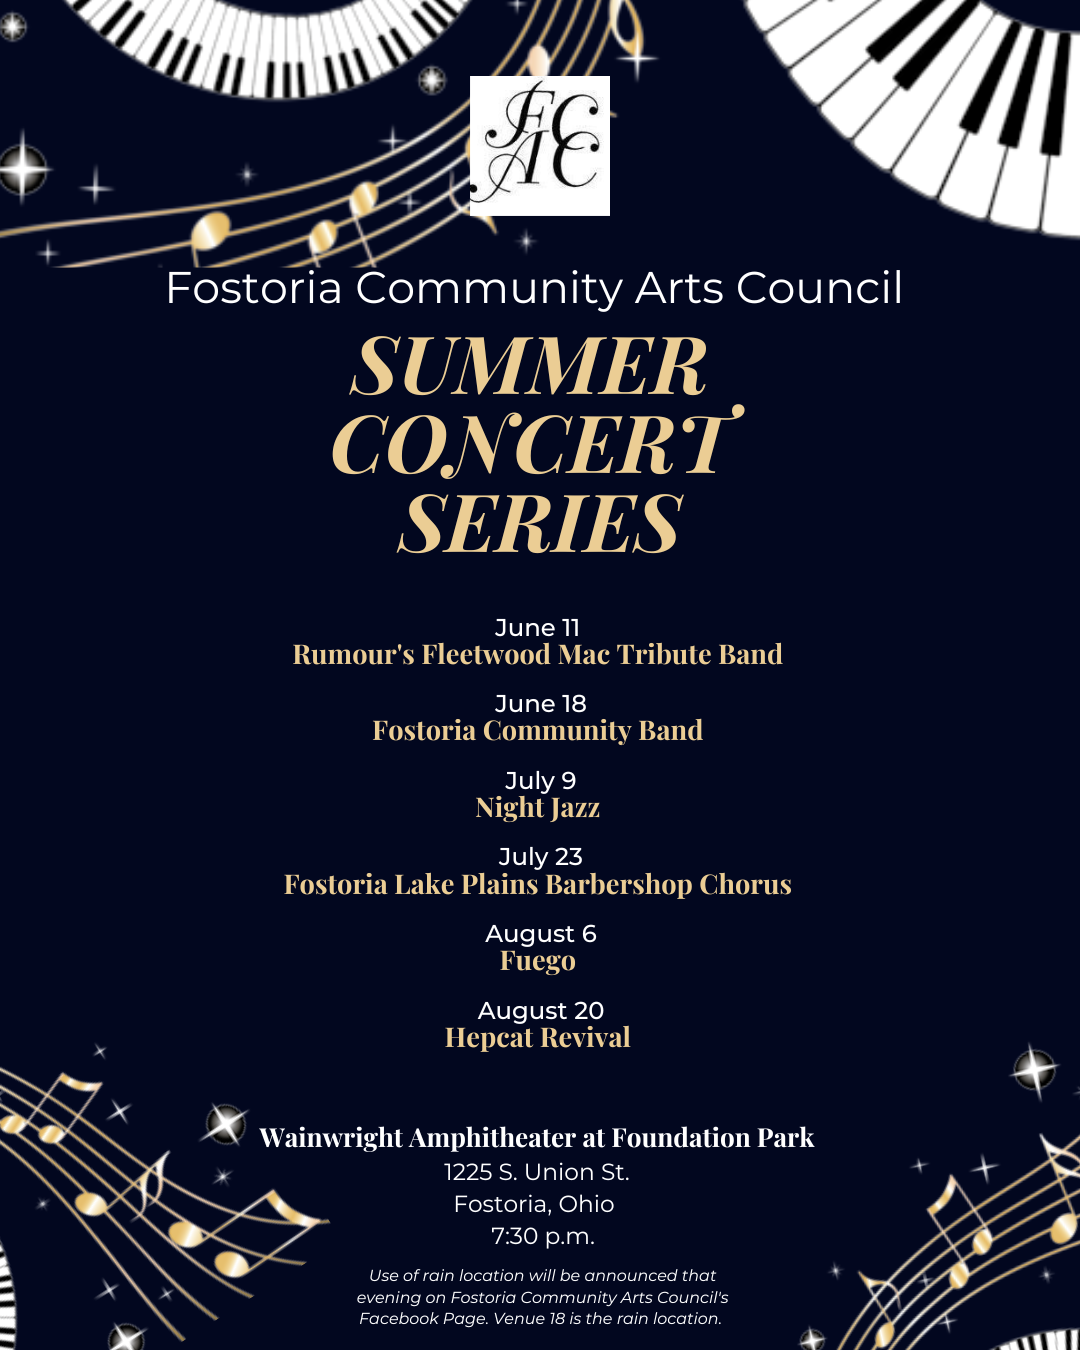 FCAC Summer Concert Series -  Fostoria Community Band